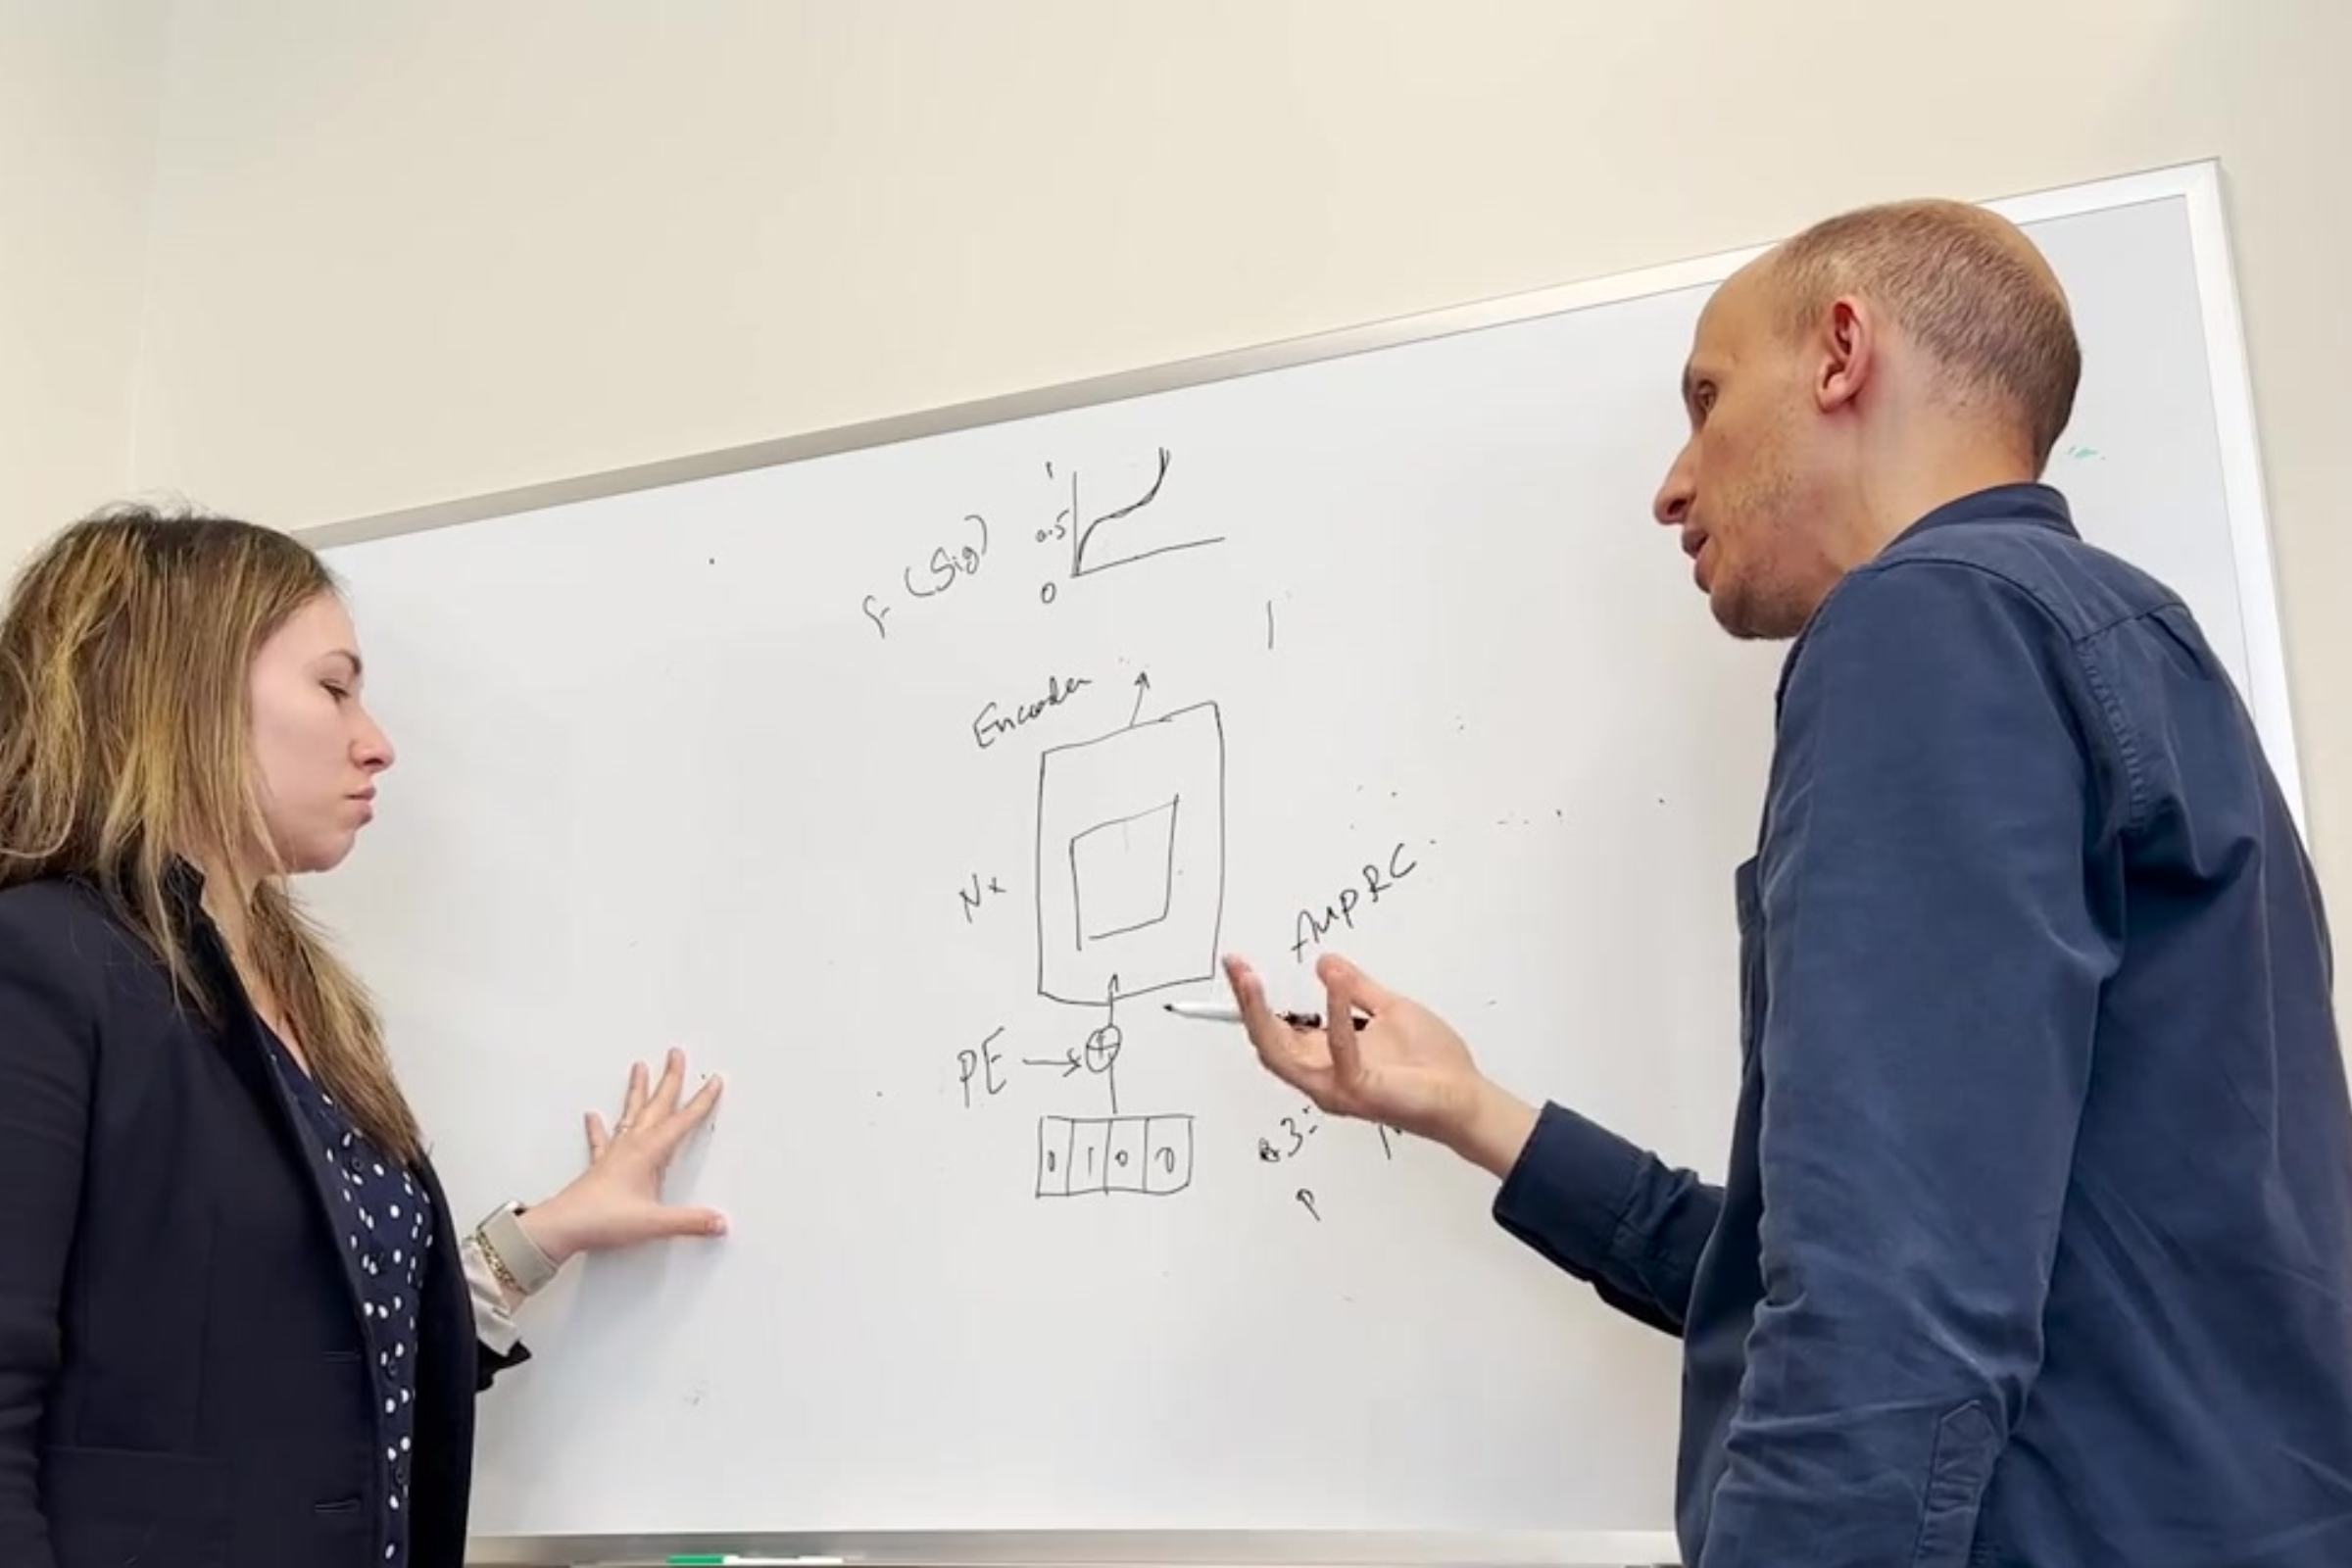 Dr. Noam Auslander and lab partner discuss AI research written on whiteboard